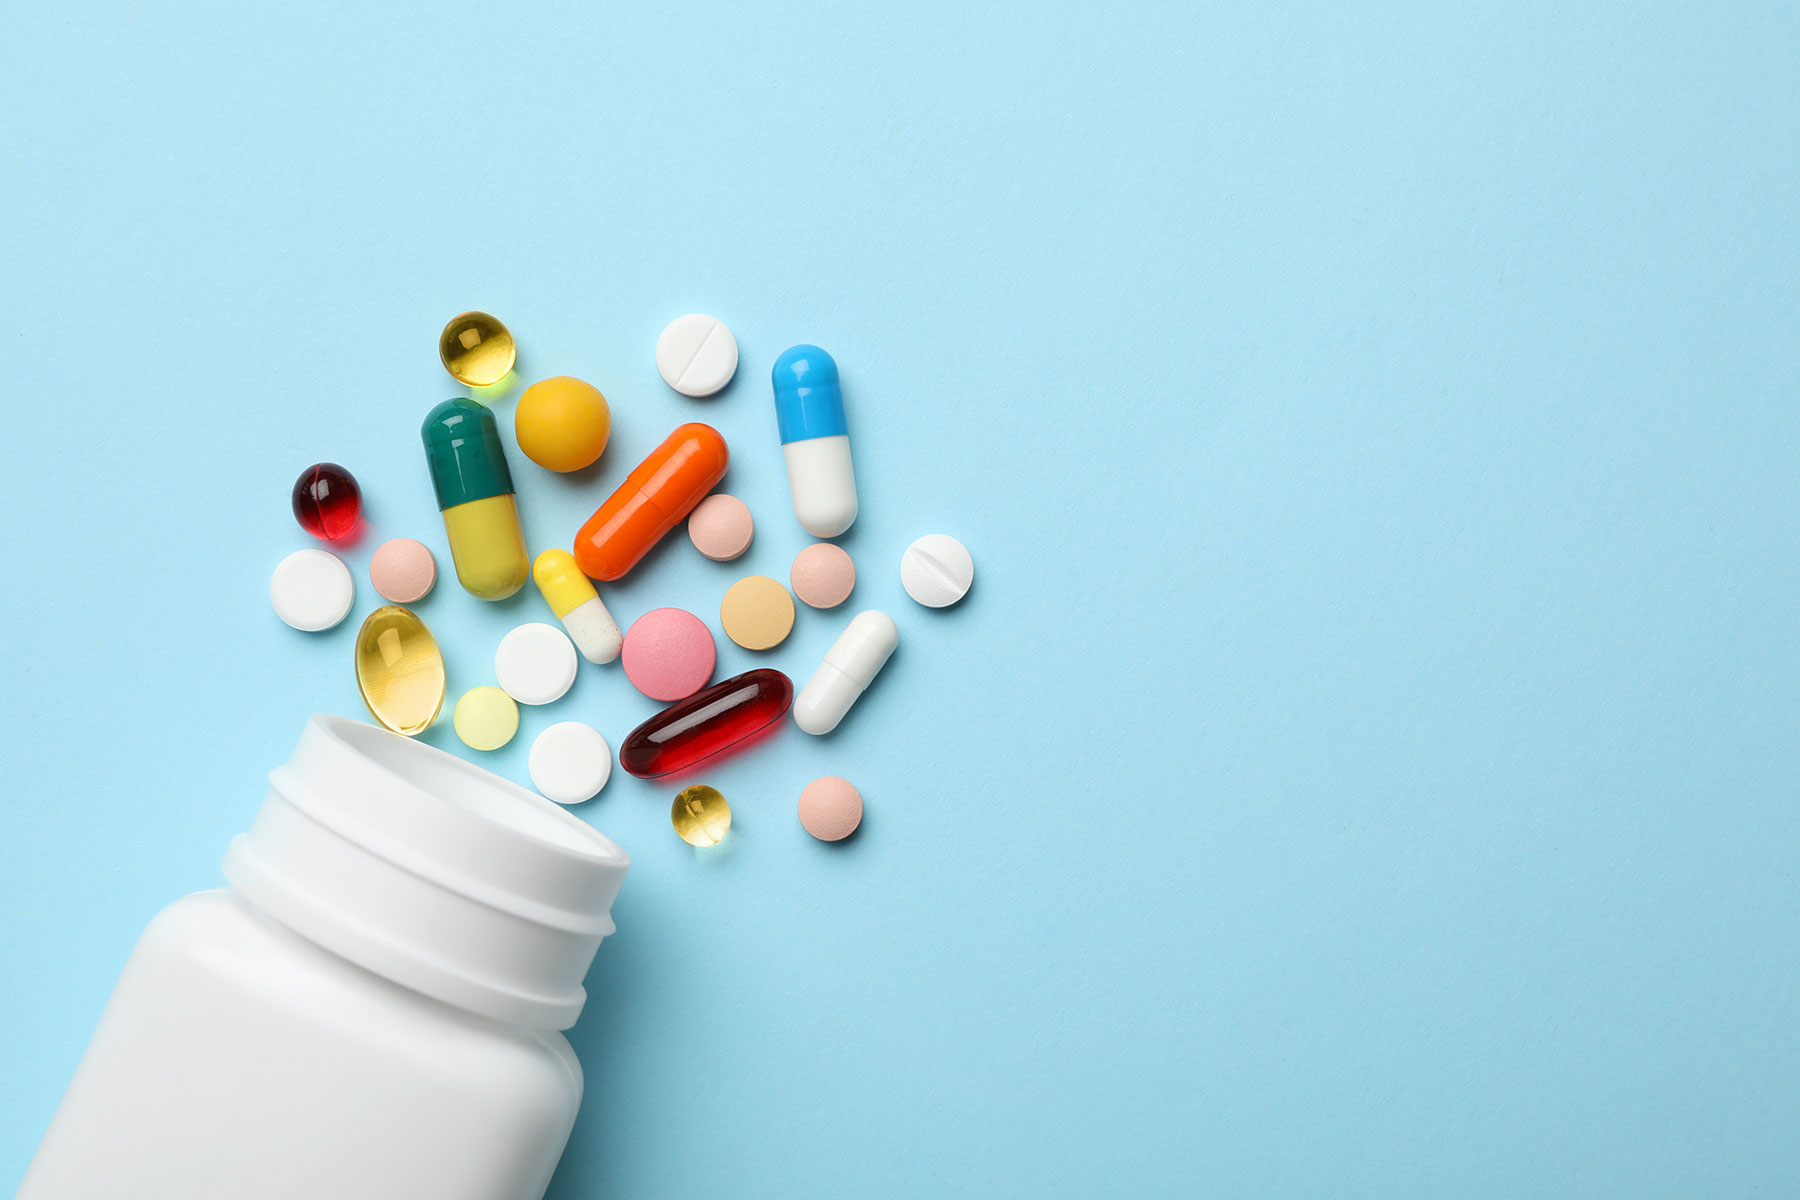 An assortment of the most addictive prescription drugs